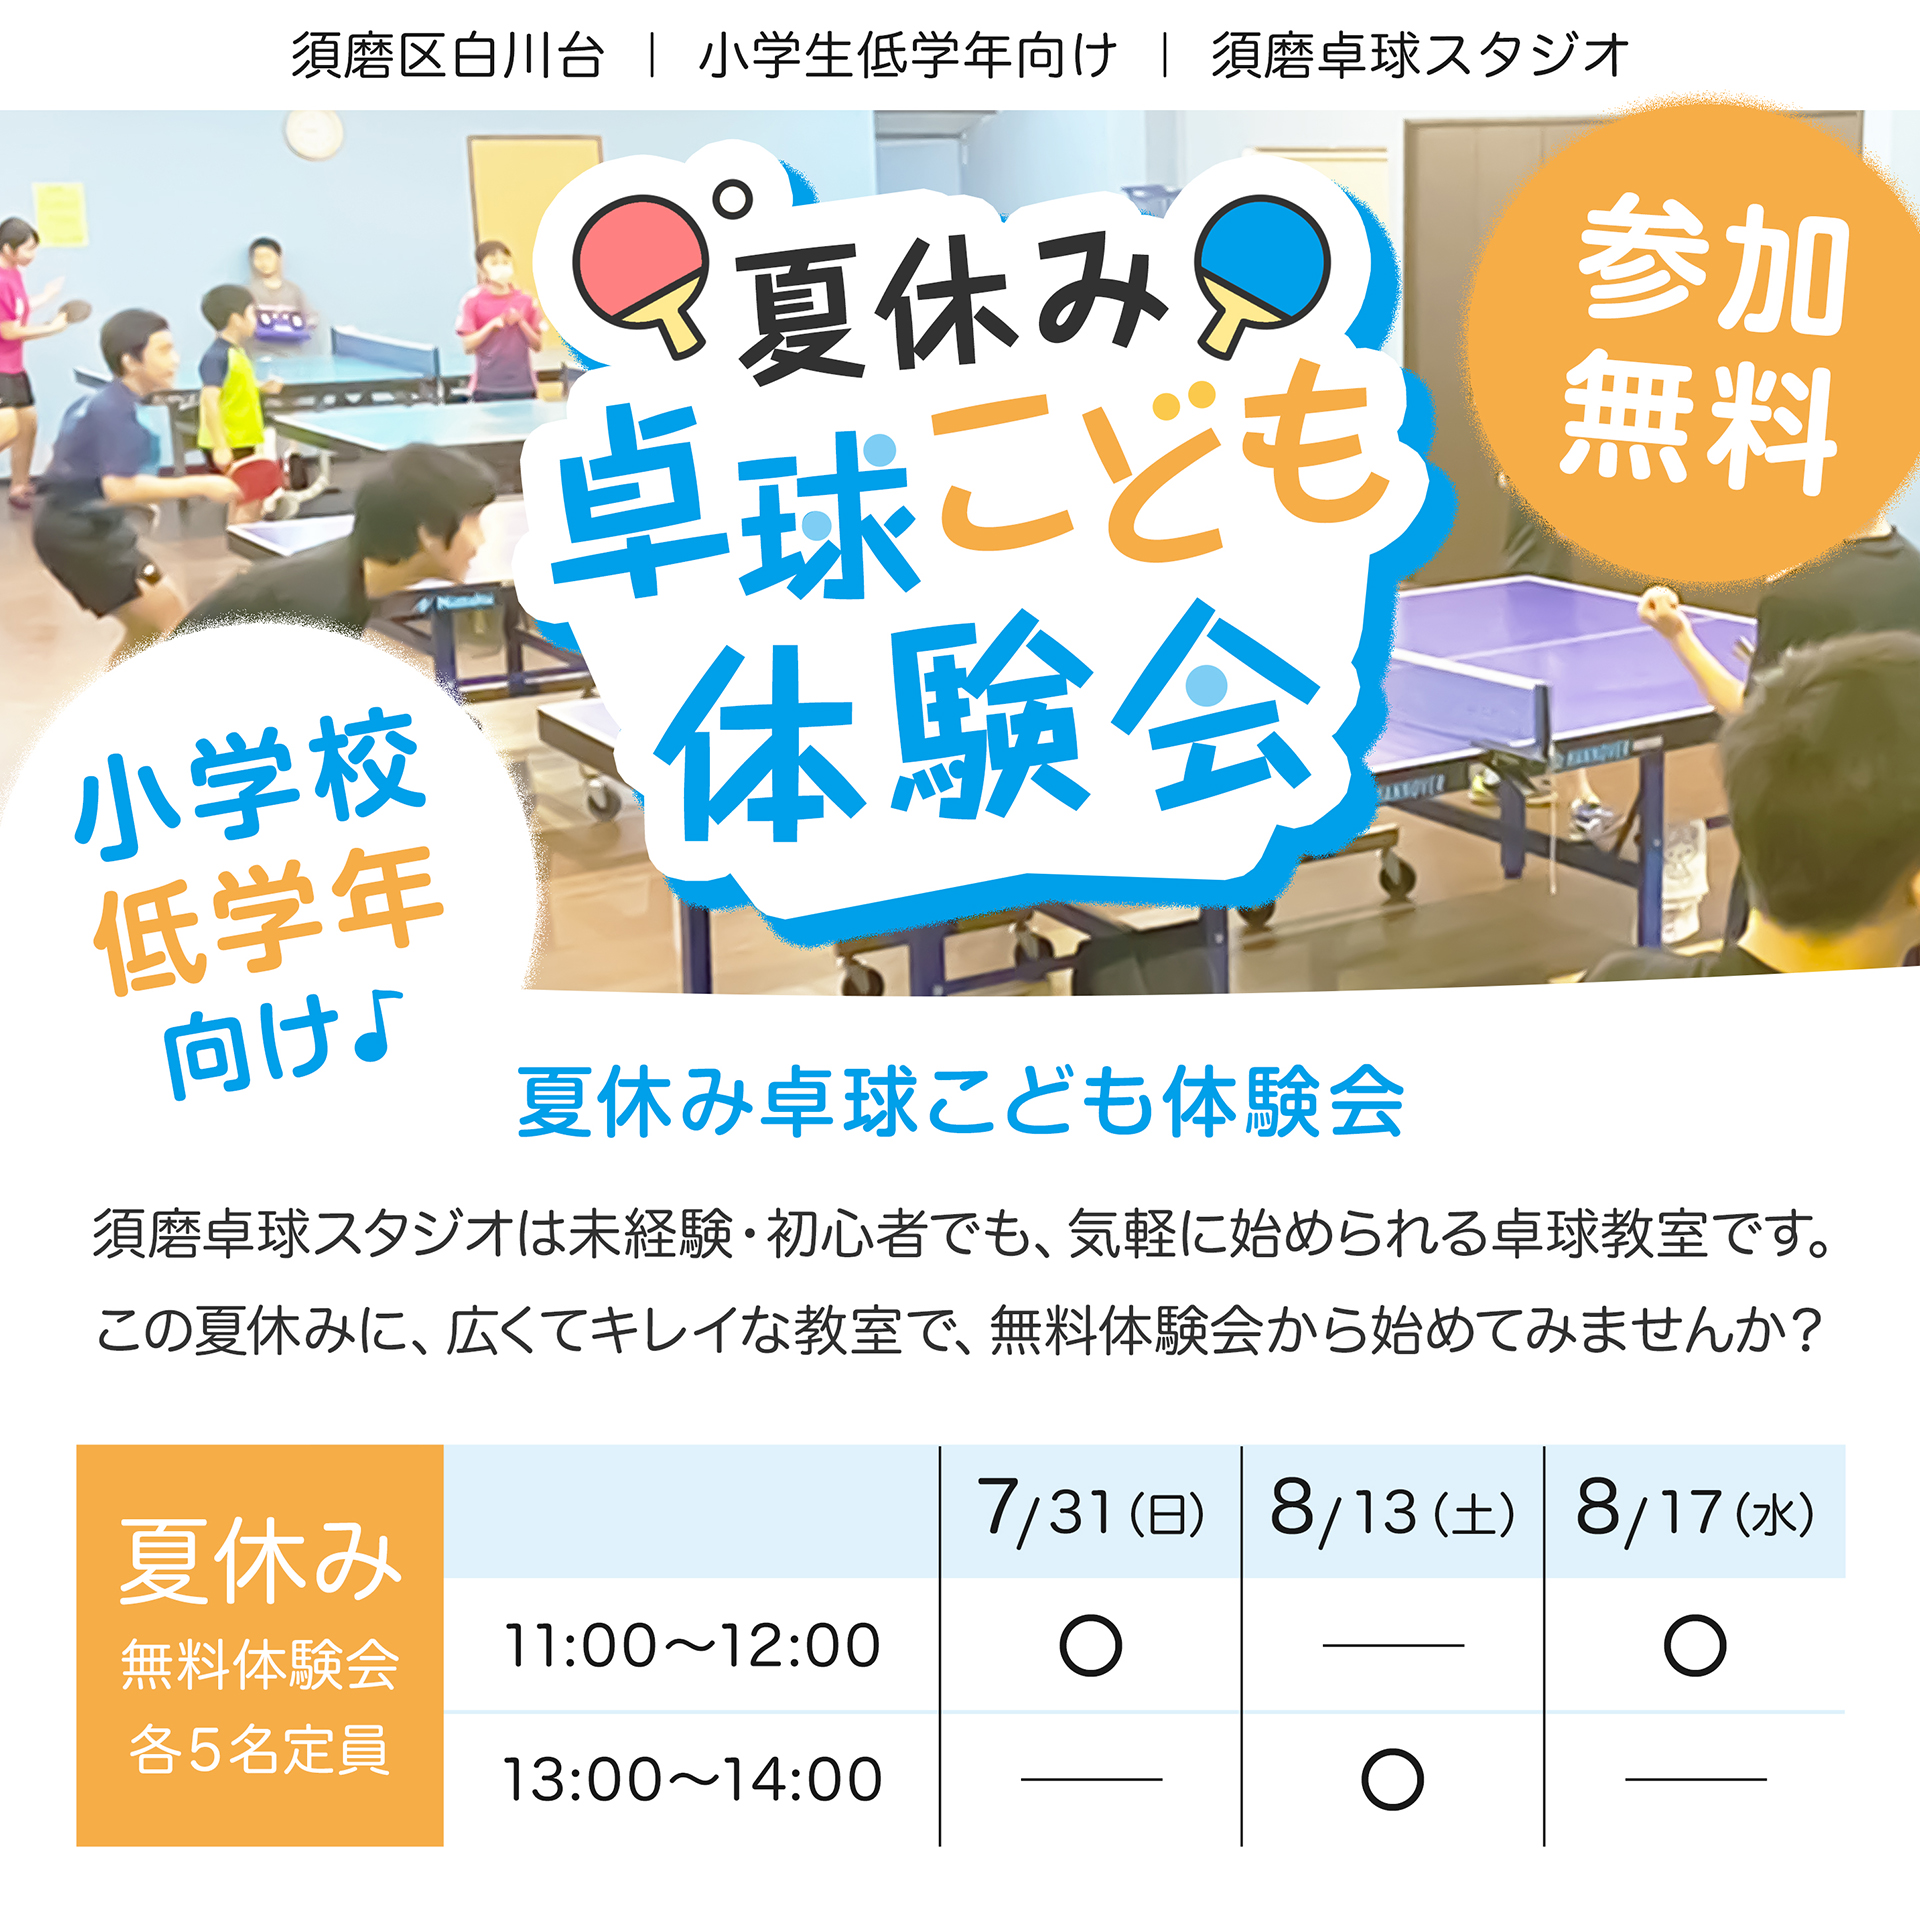 須磨の卓球教室,夏休み,ジュニア教室,須磨区,白川台,神戸市,無料体験,卓球体験会